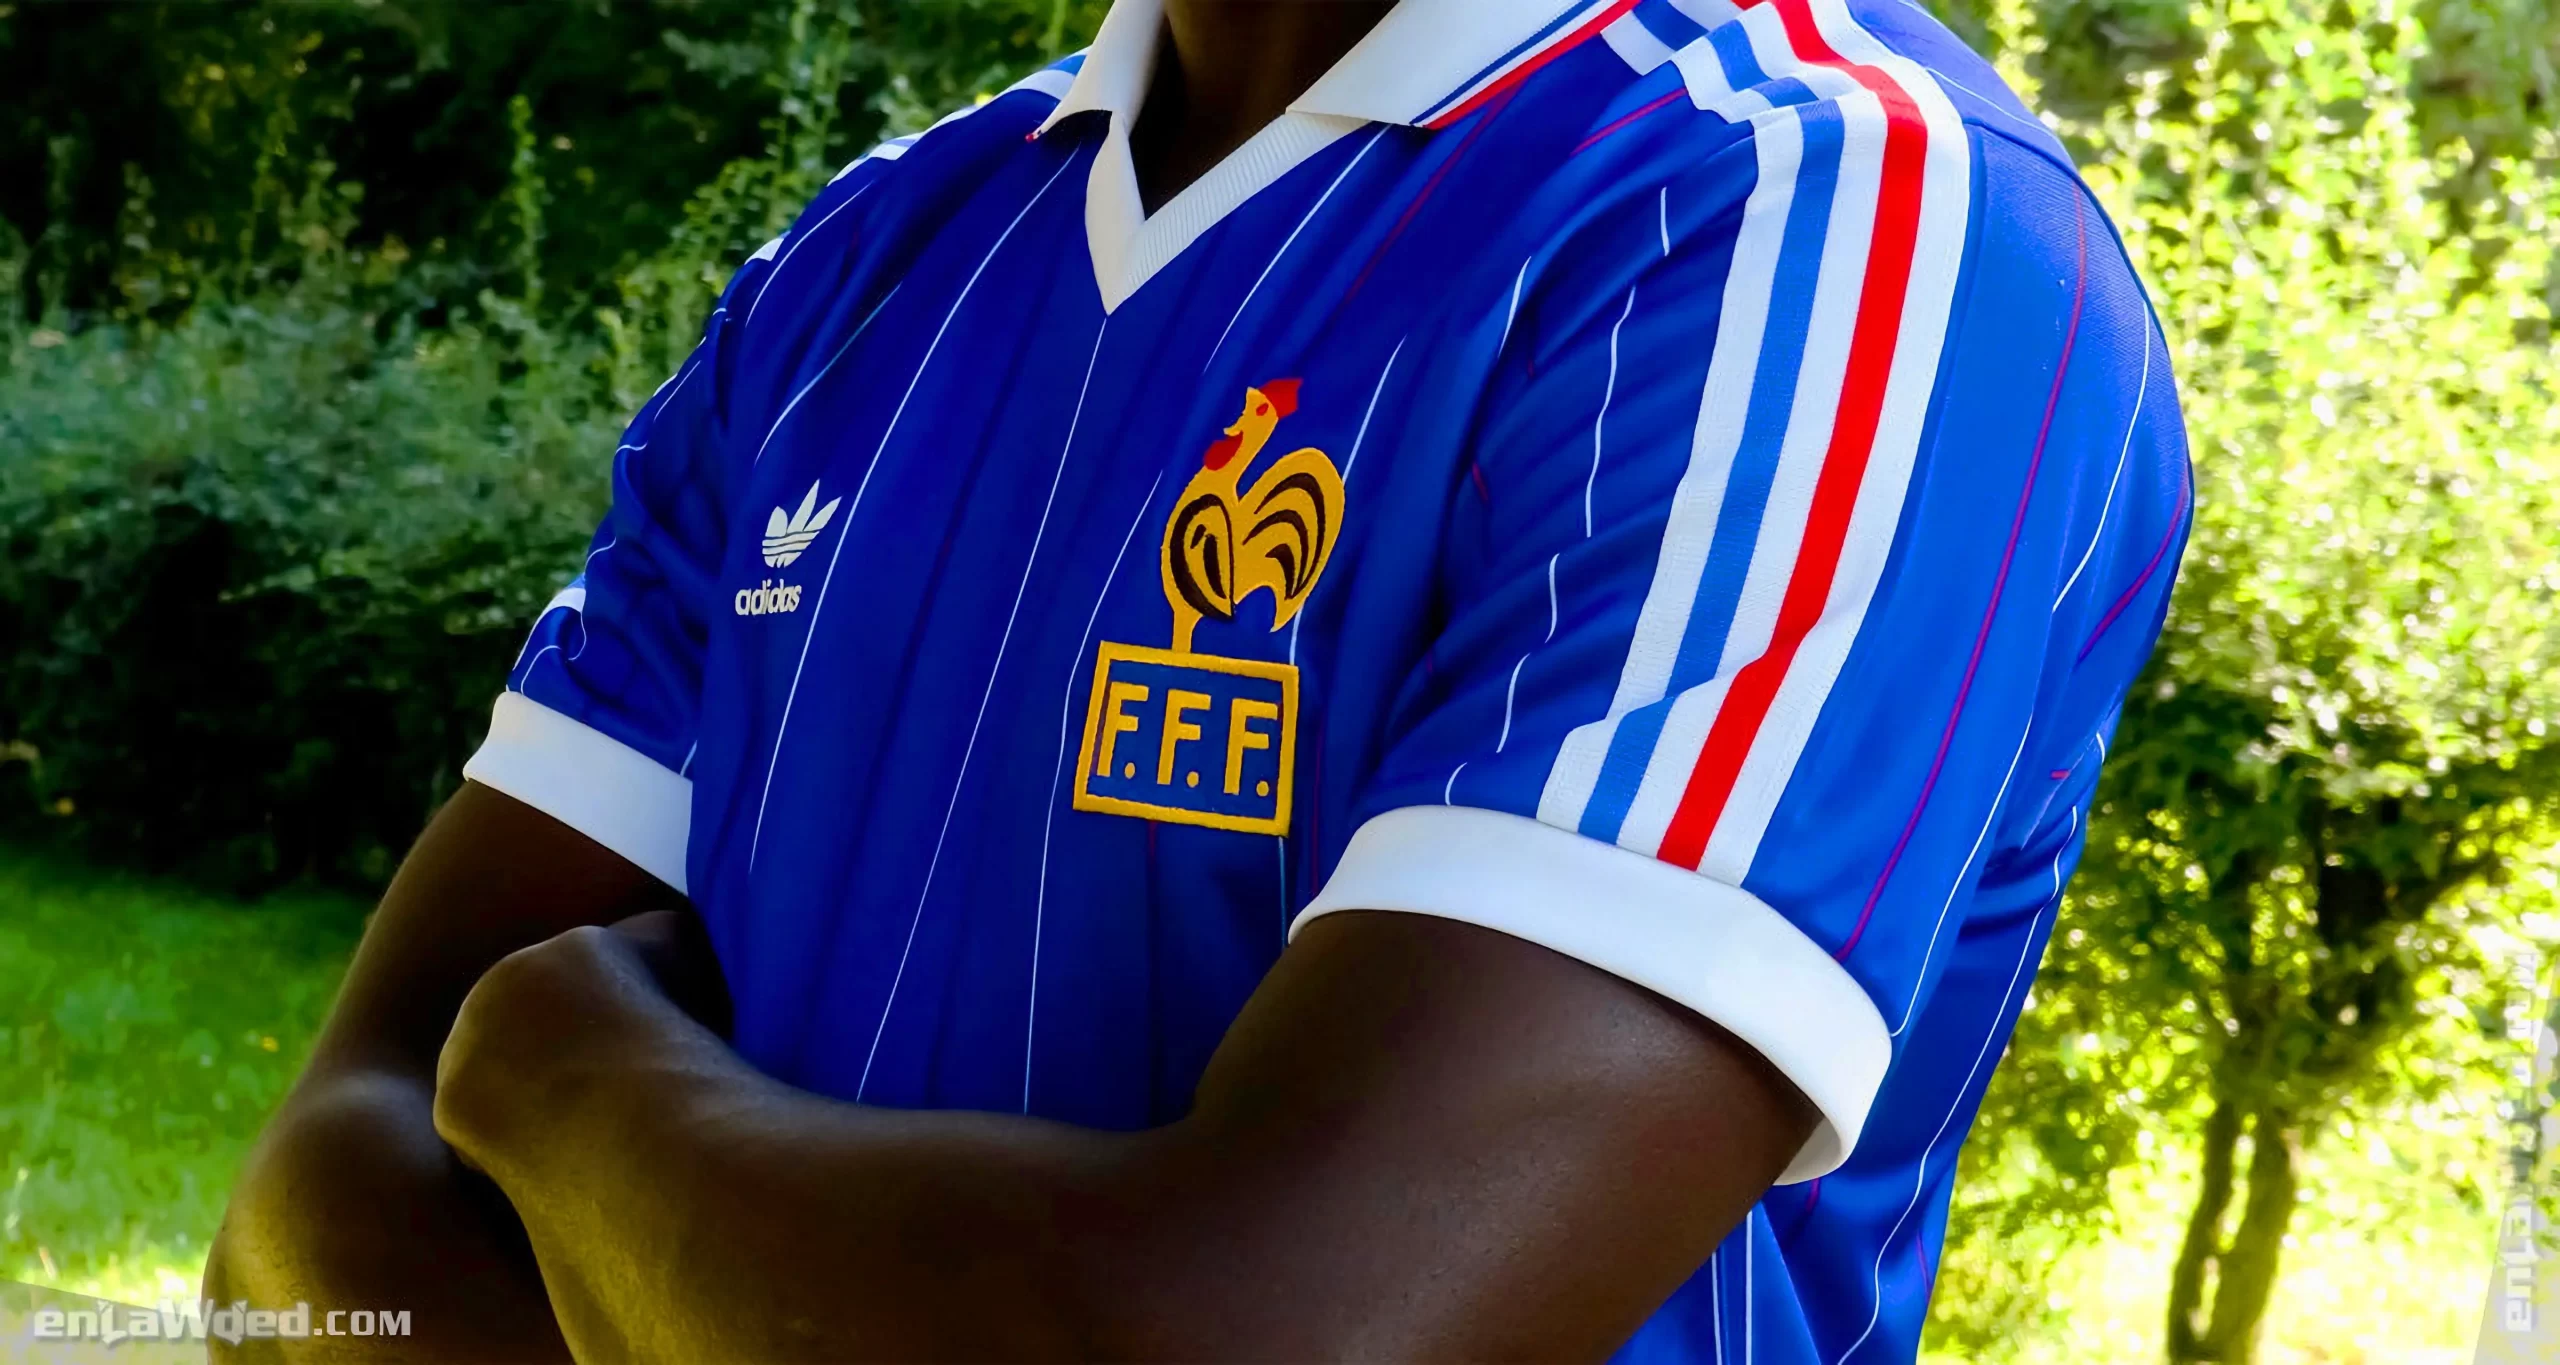 Men’s 2005 France ’82 Carre Magique Jersey by Adidas: Devoted (EnLawded.com file #lmchk90390ip2y122971kg9st)